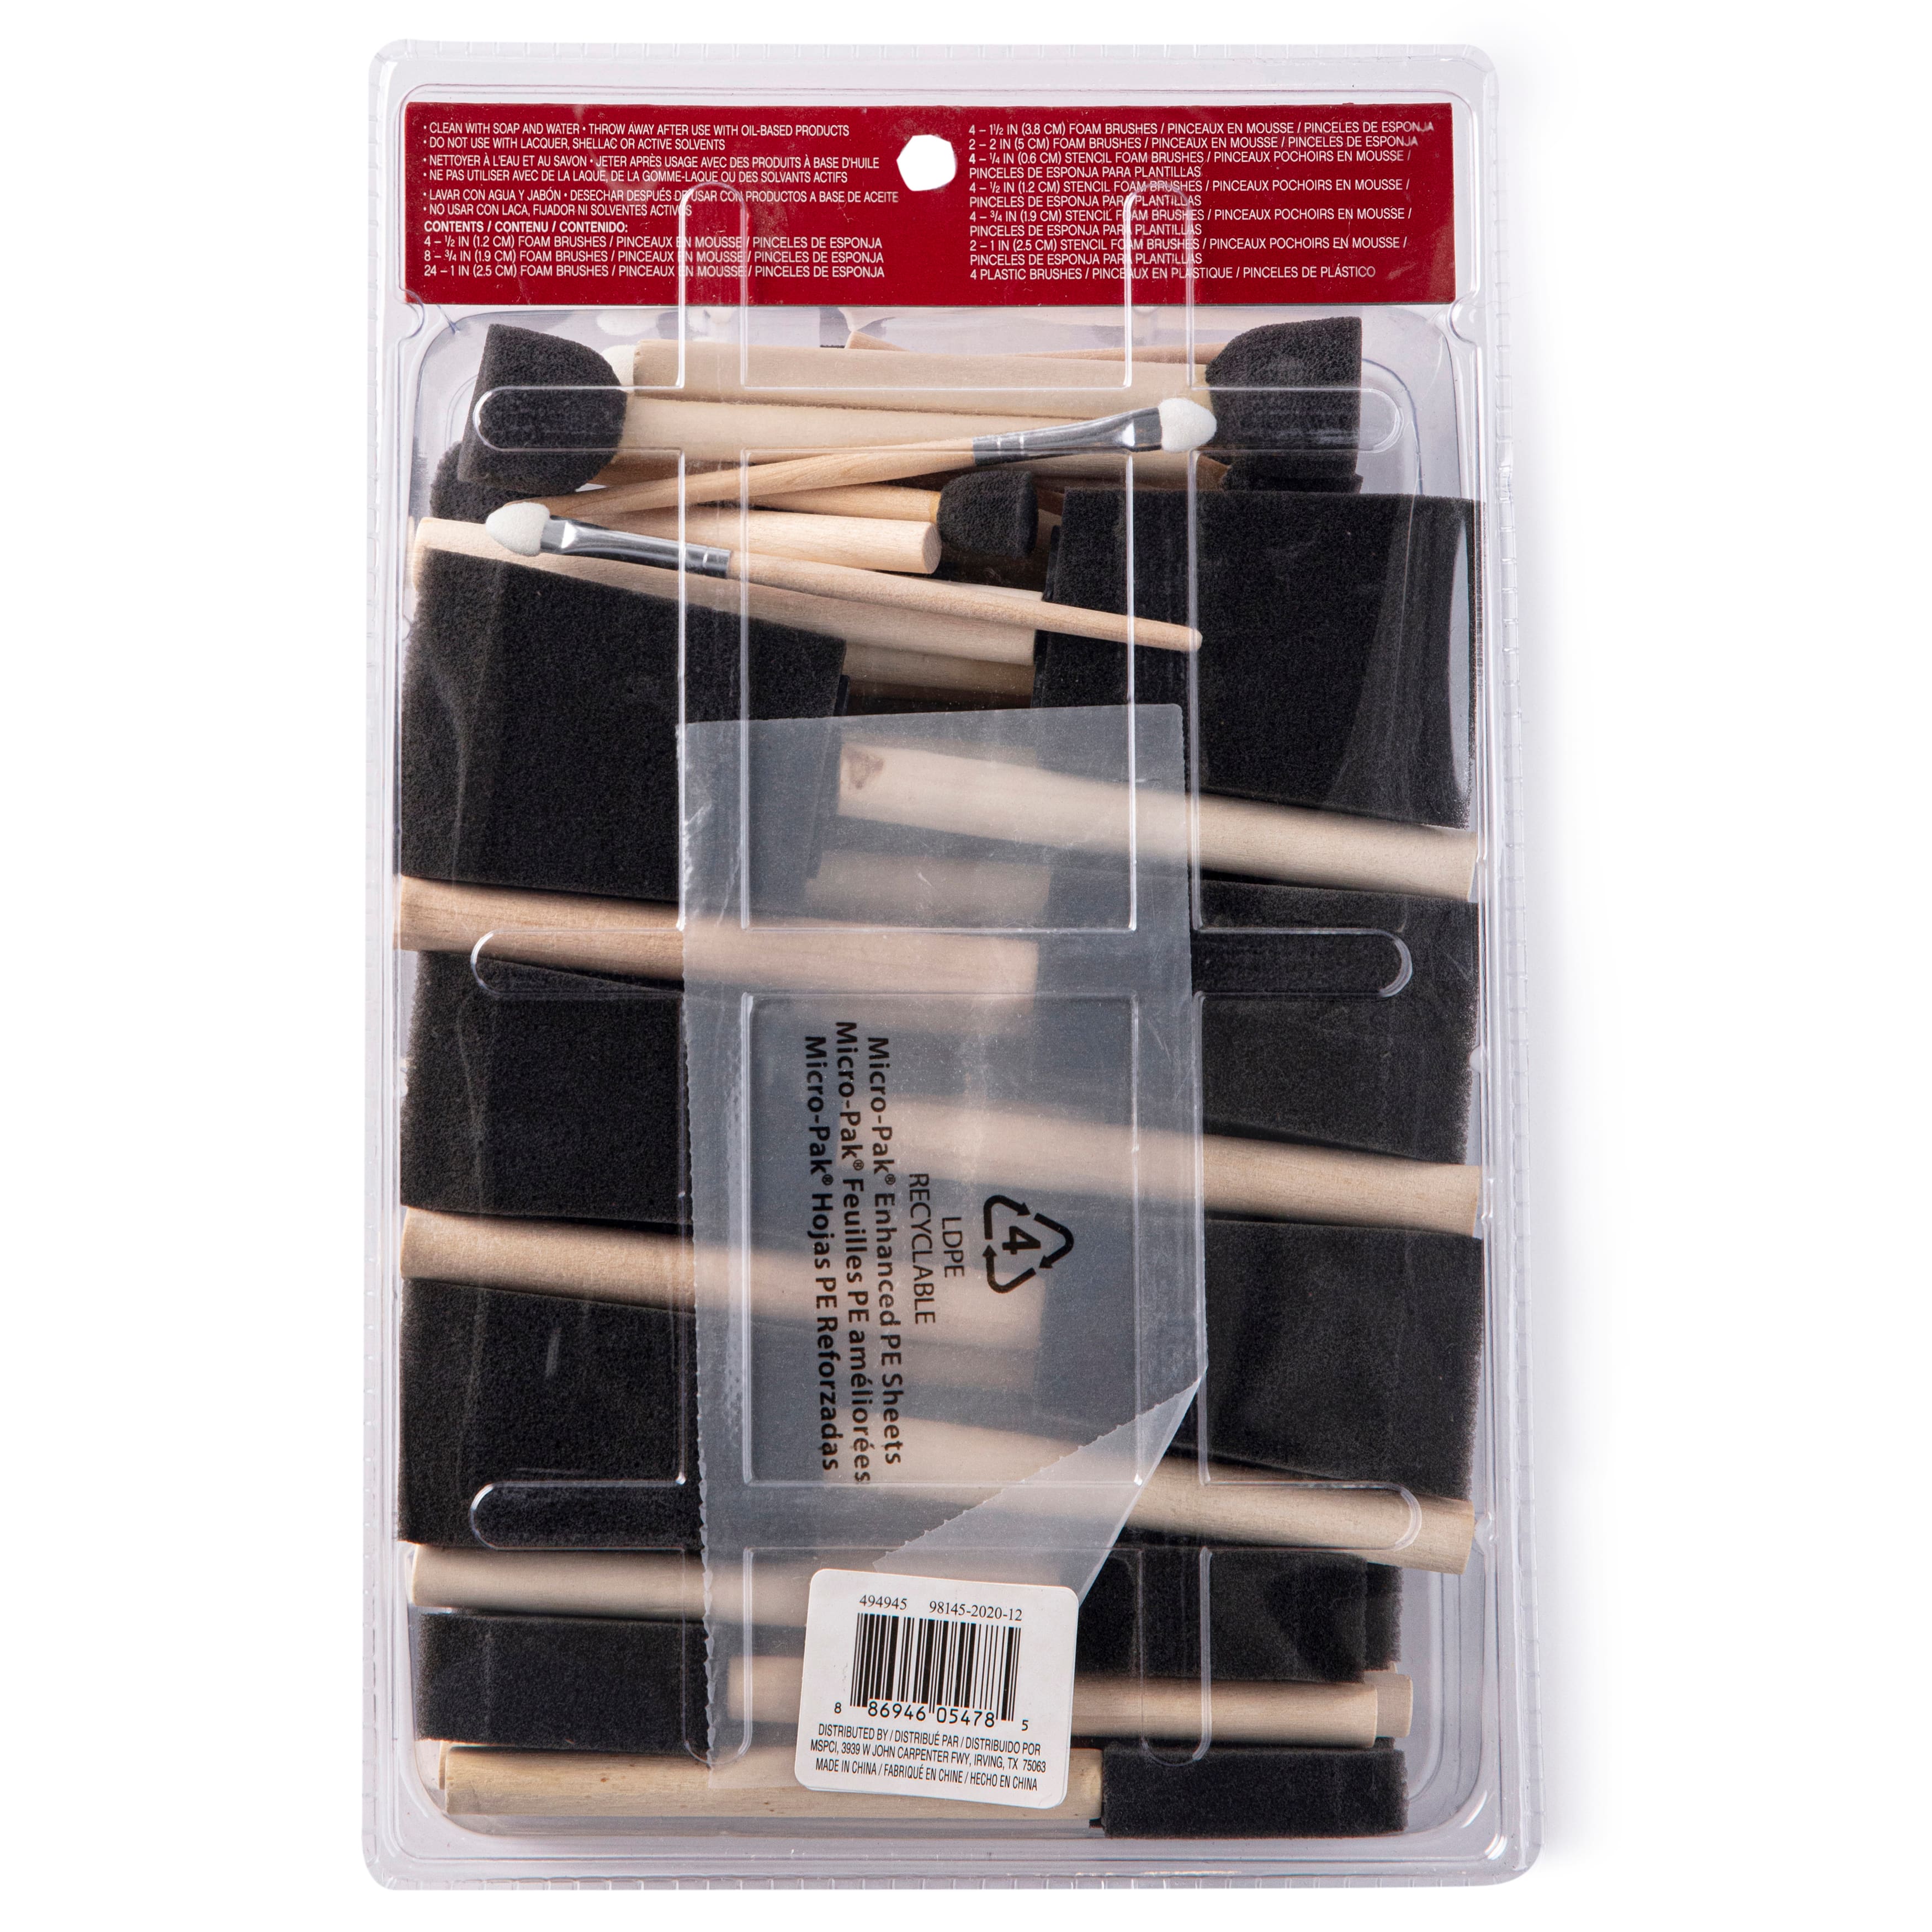 3 Packs: 60 ct. (180 total) Foam Brush Value Set by Craft Smart&#xAE;